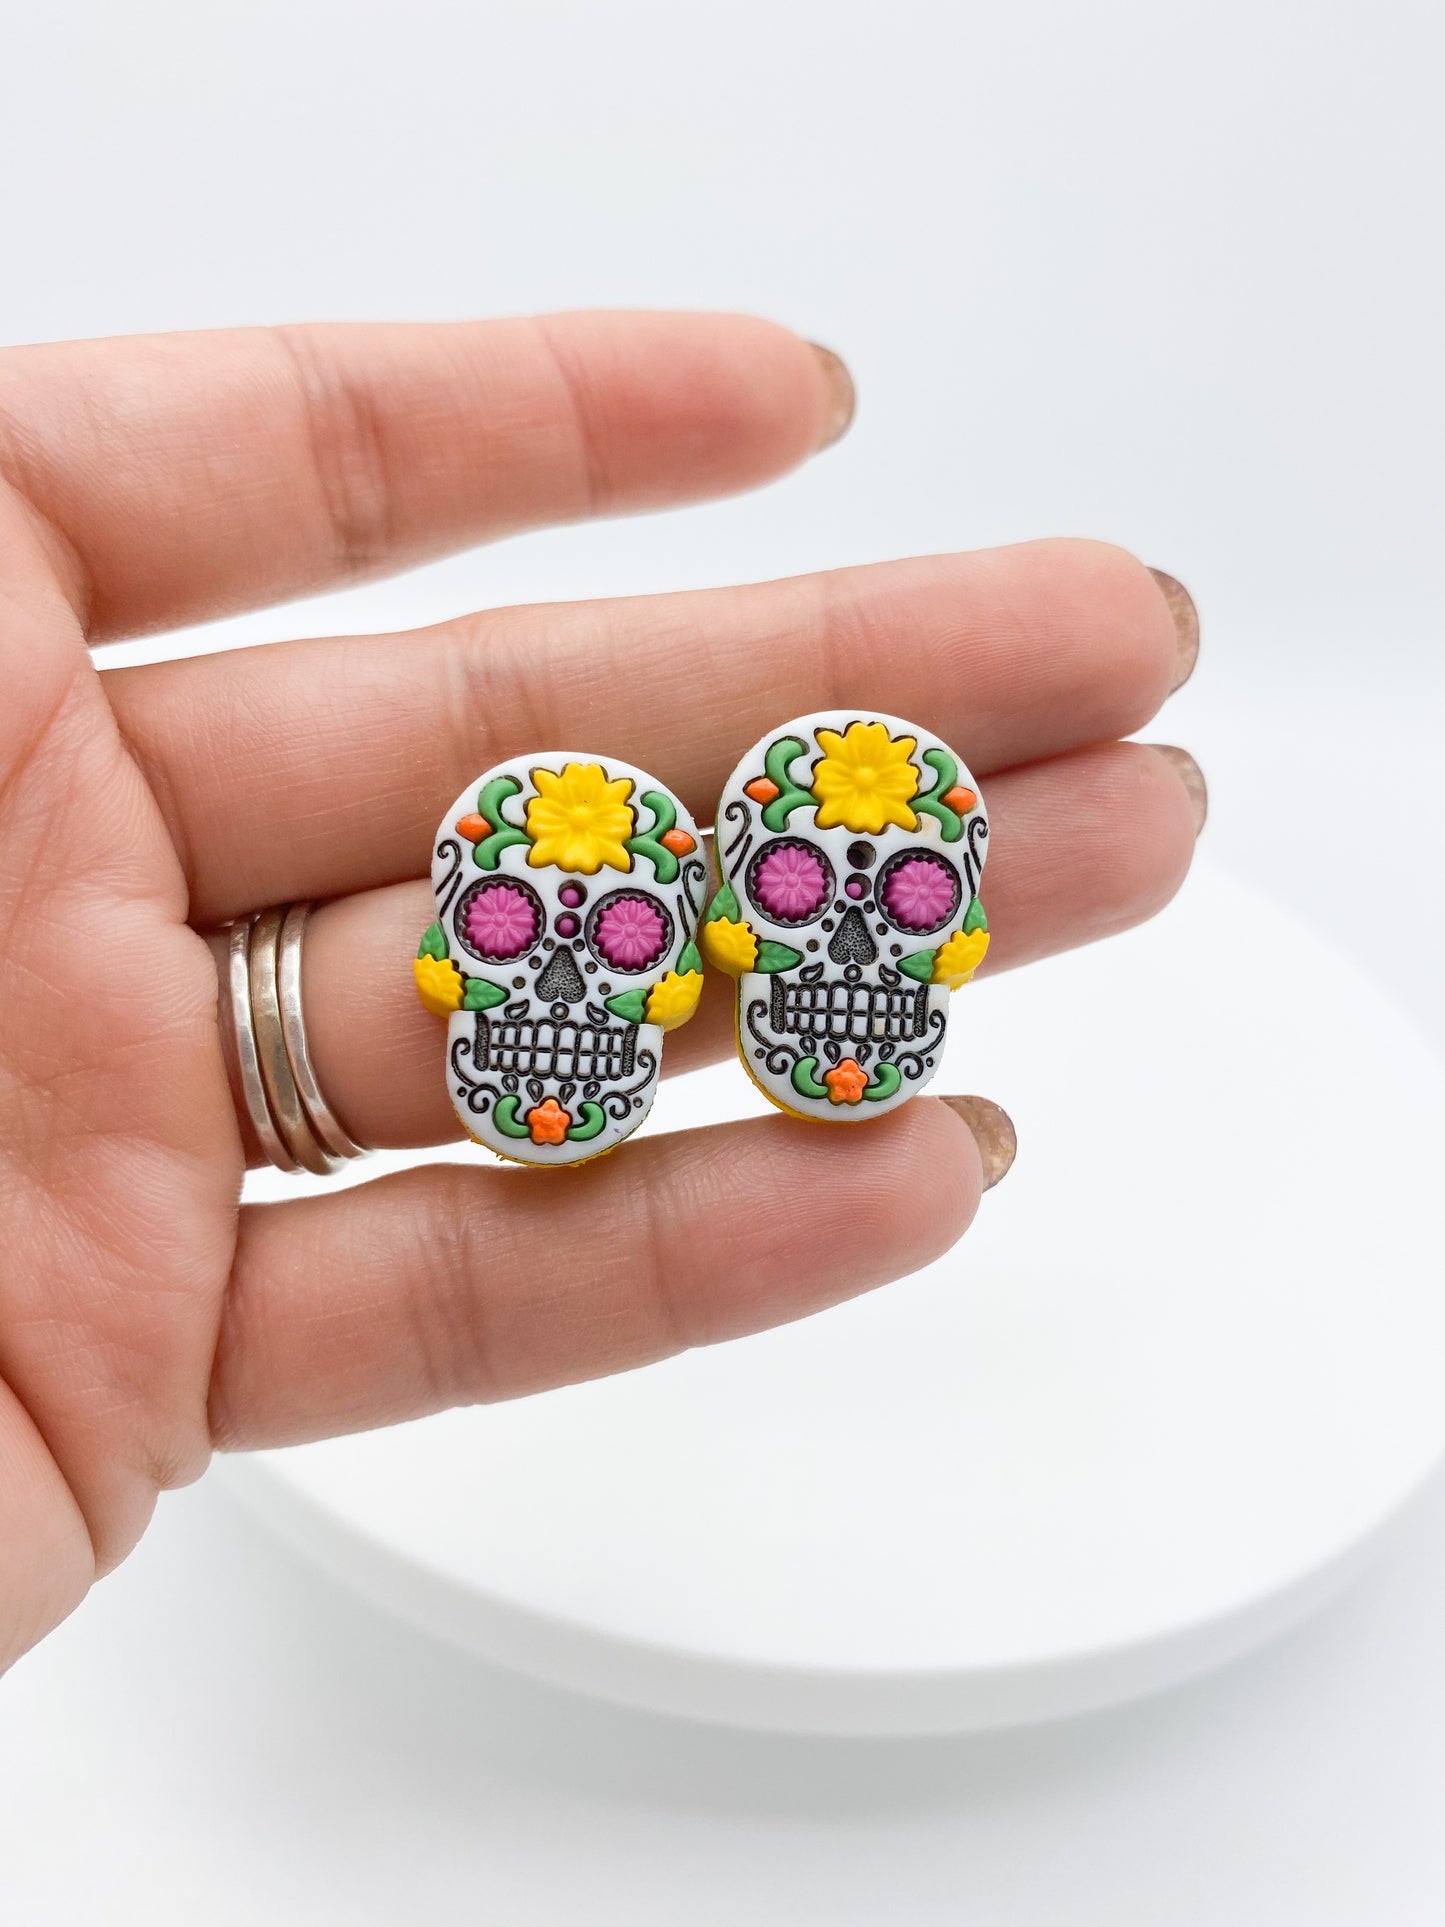 Sugar Skull button earrings